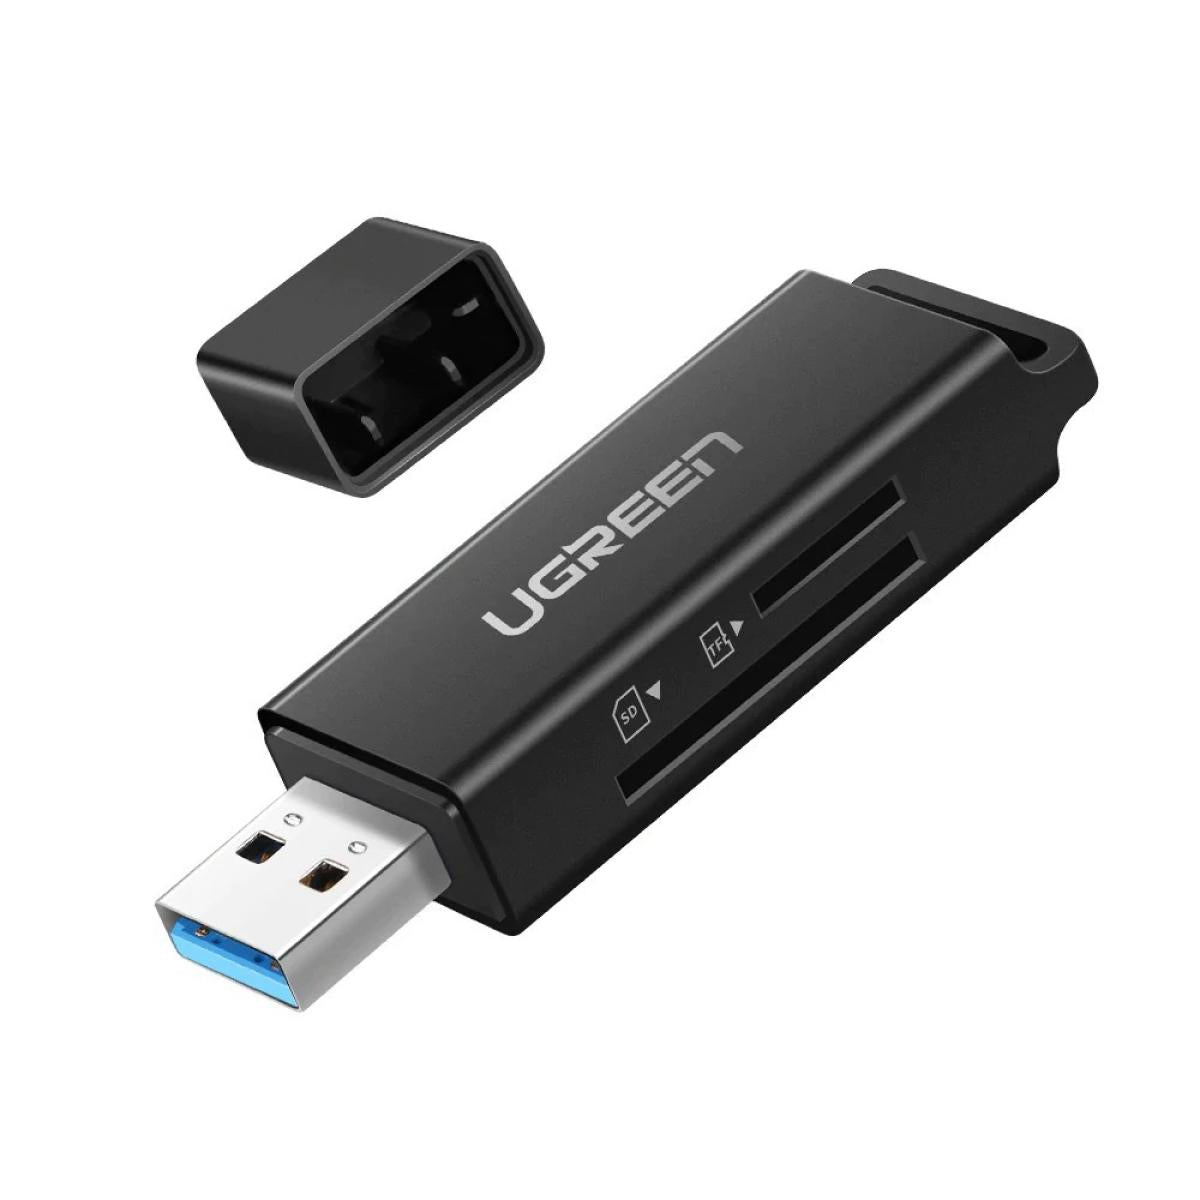 UGREEN CM104 USB 3.0 Card Reader For TF/SD Card